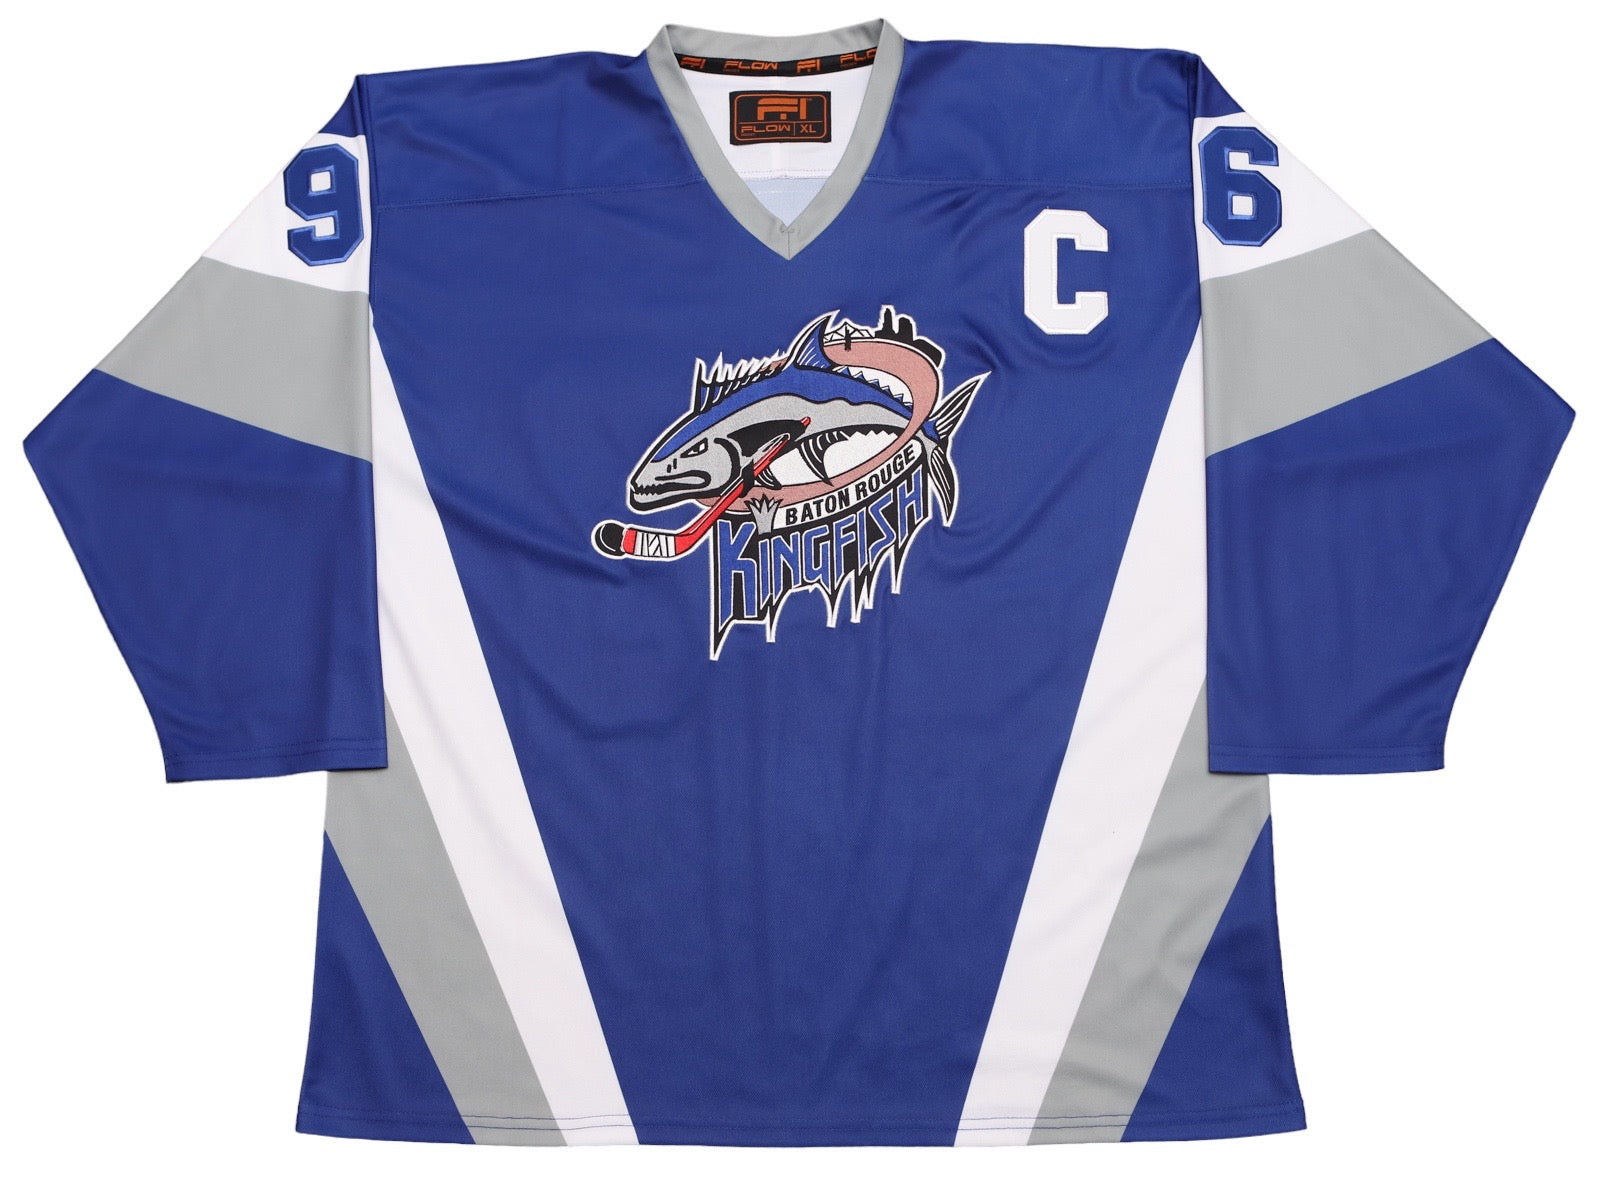 NHL Shop Custom AUTHENTIC Jerseys are screen printed??????? : r/hockey